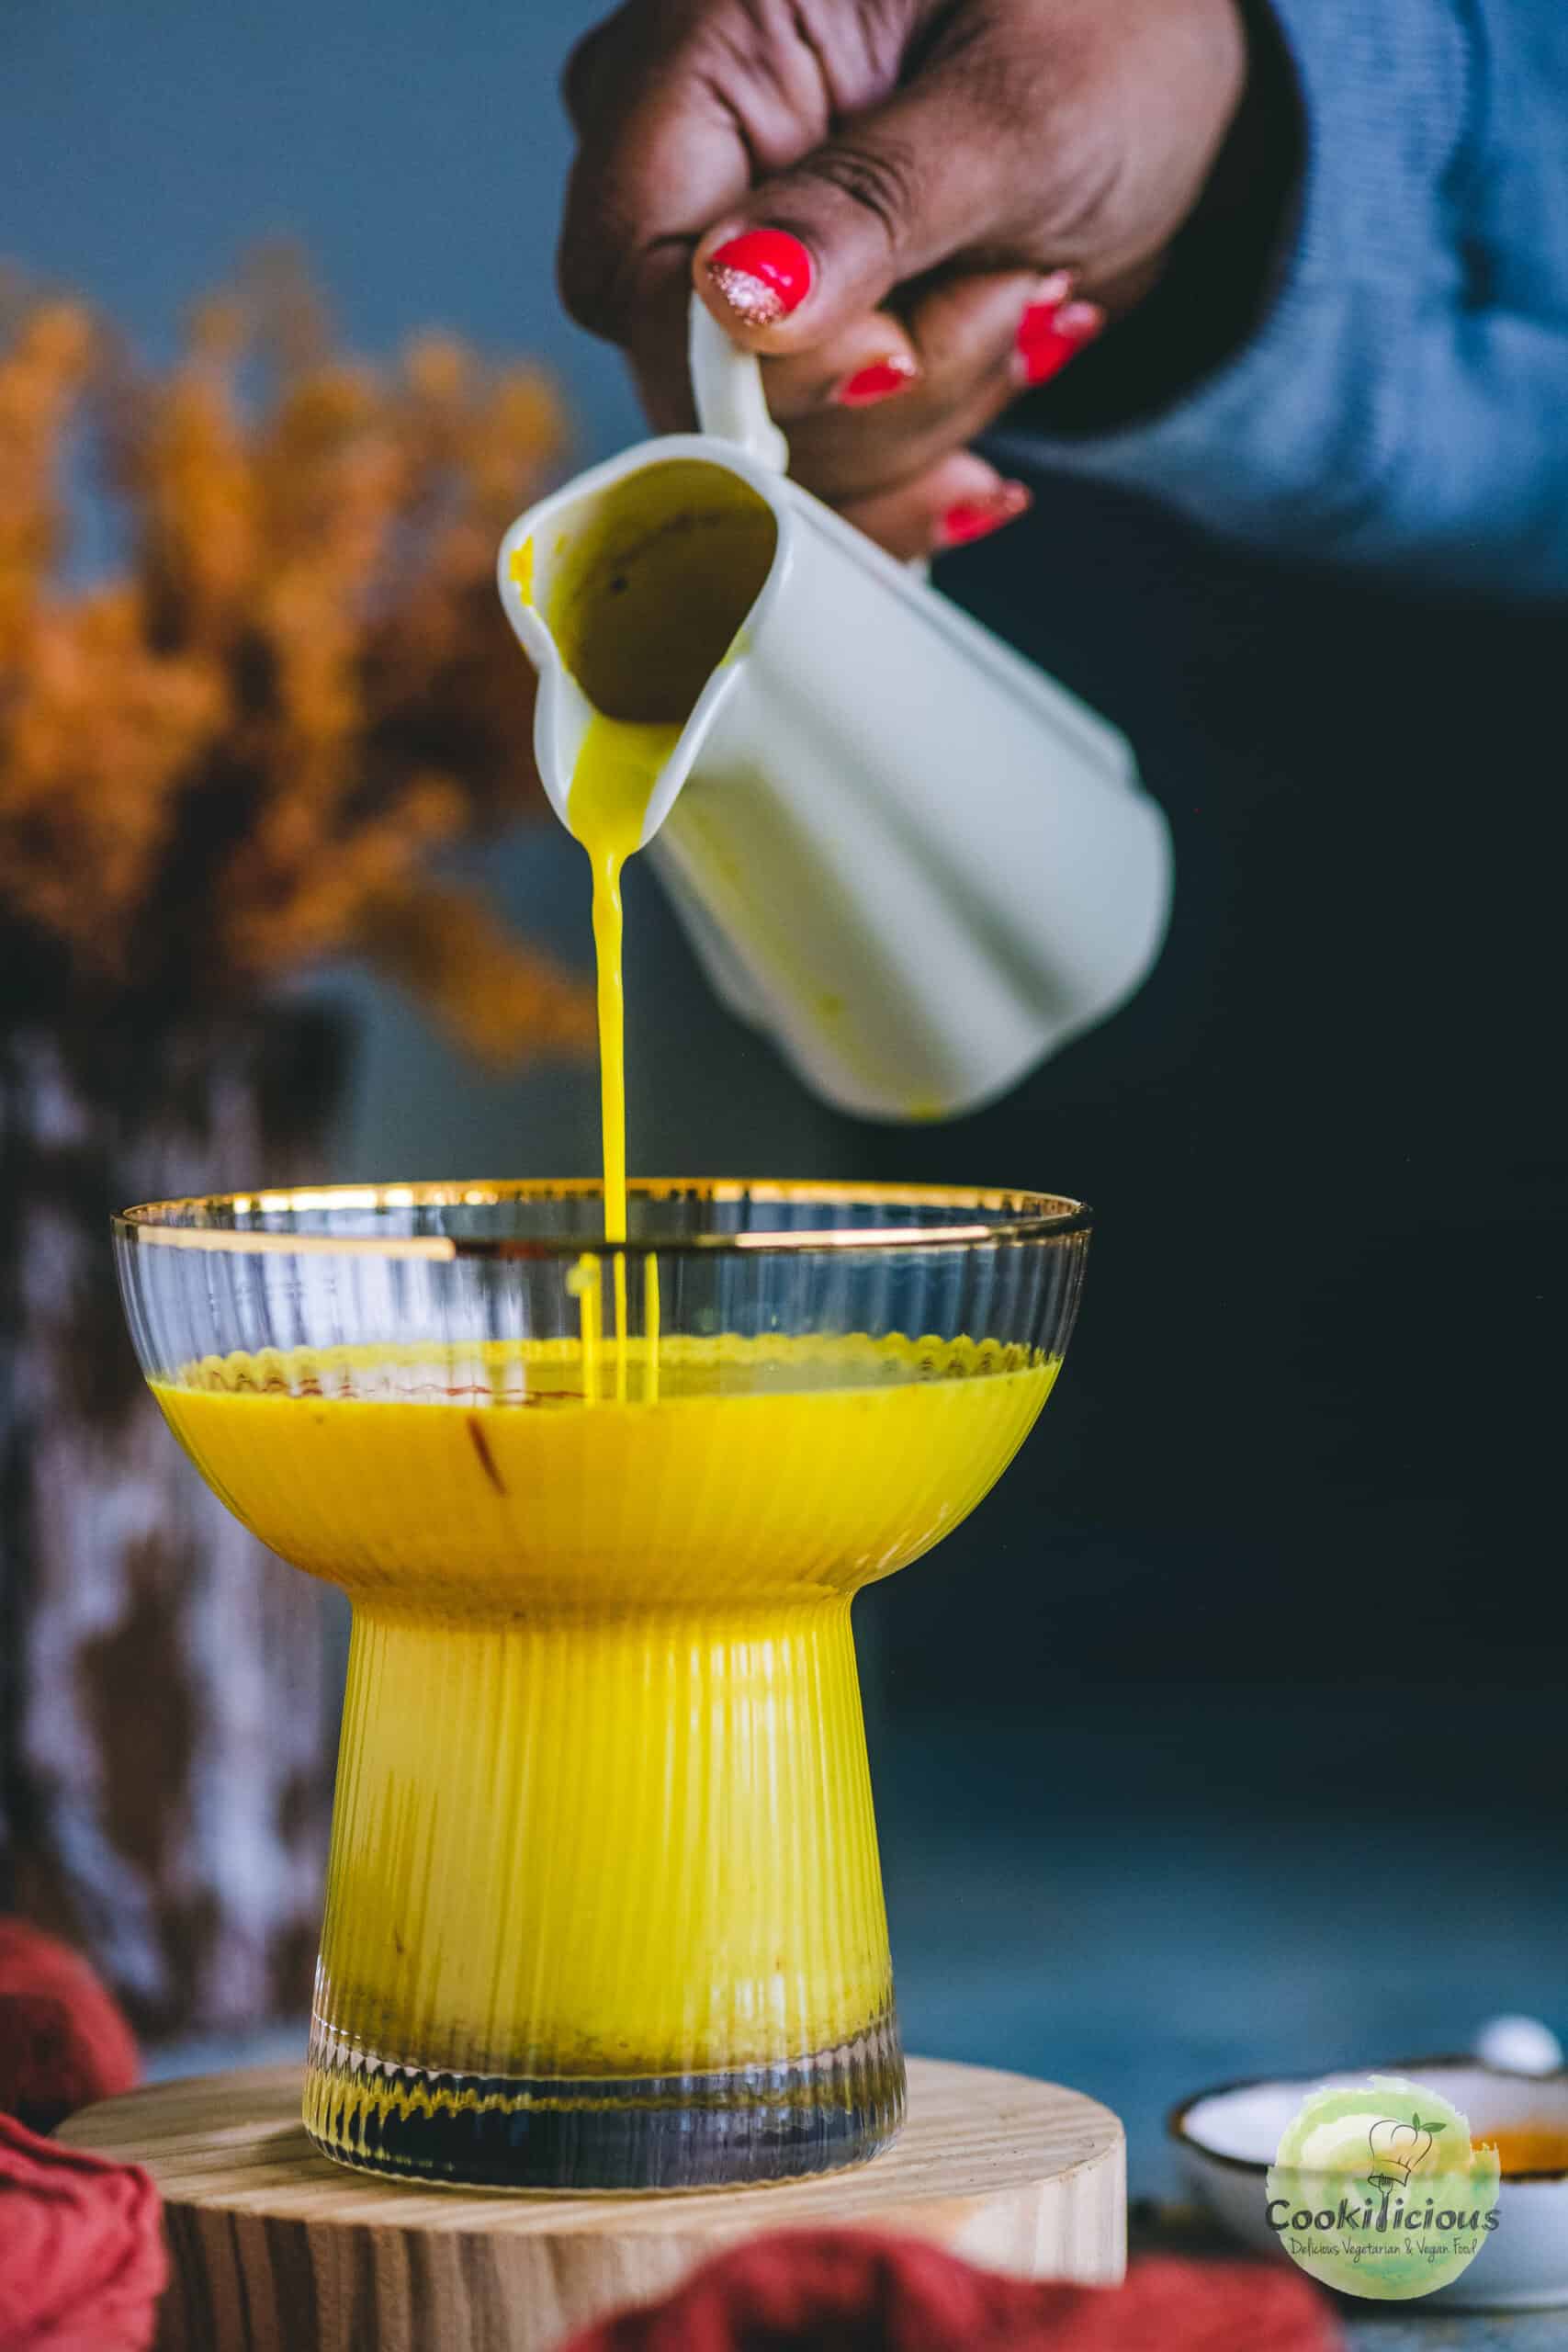 Turmeric Latte (Golden Milk Recipe) - Real + Vibrant